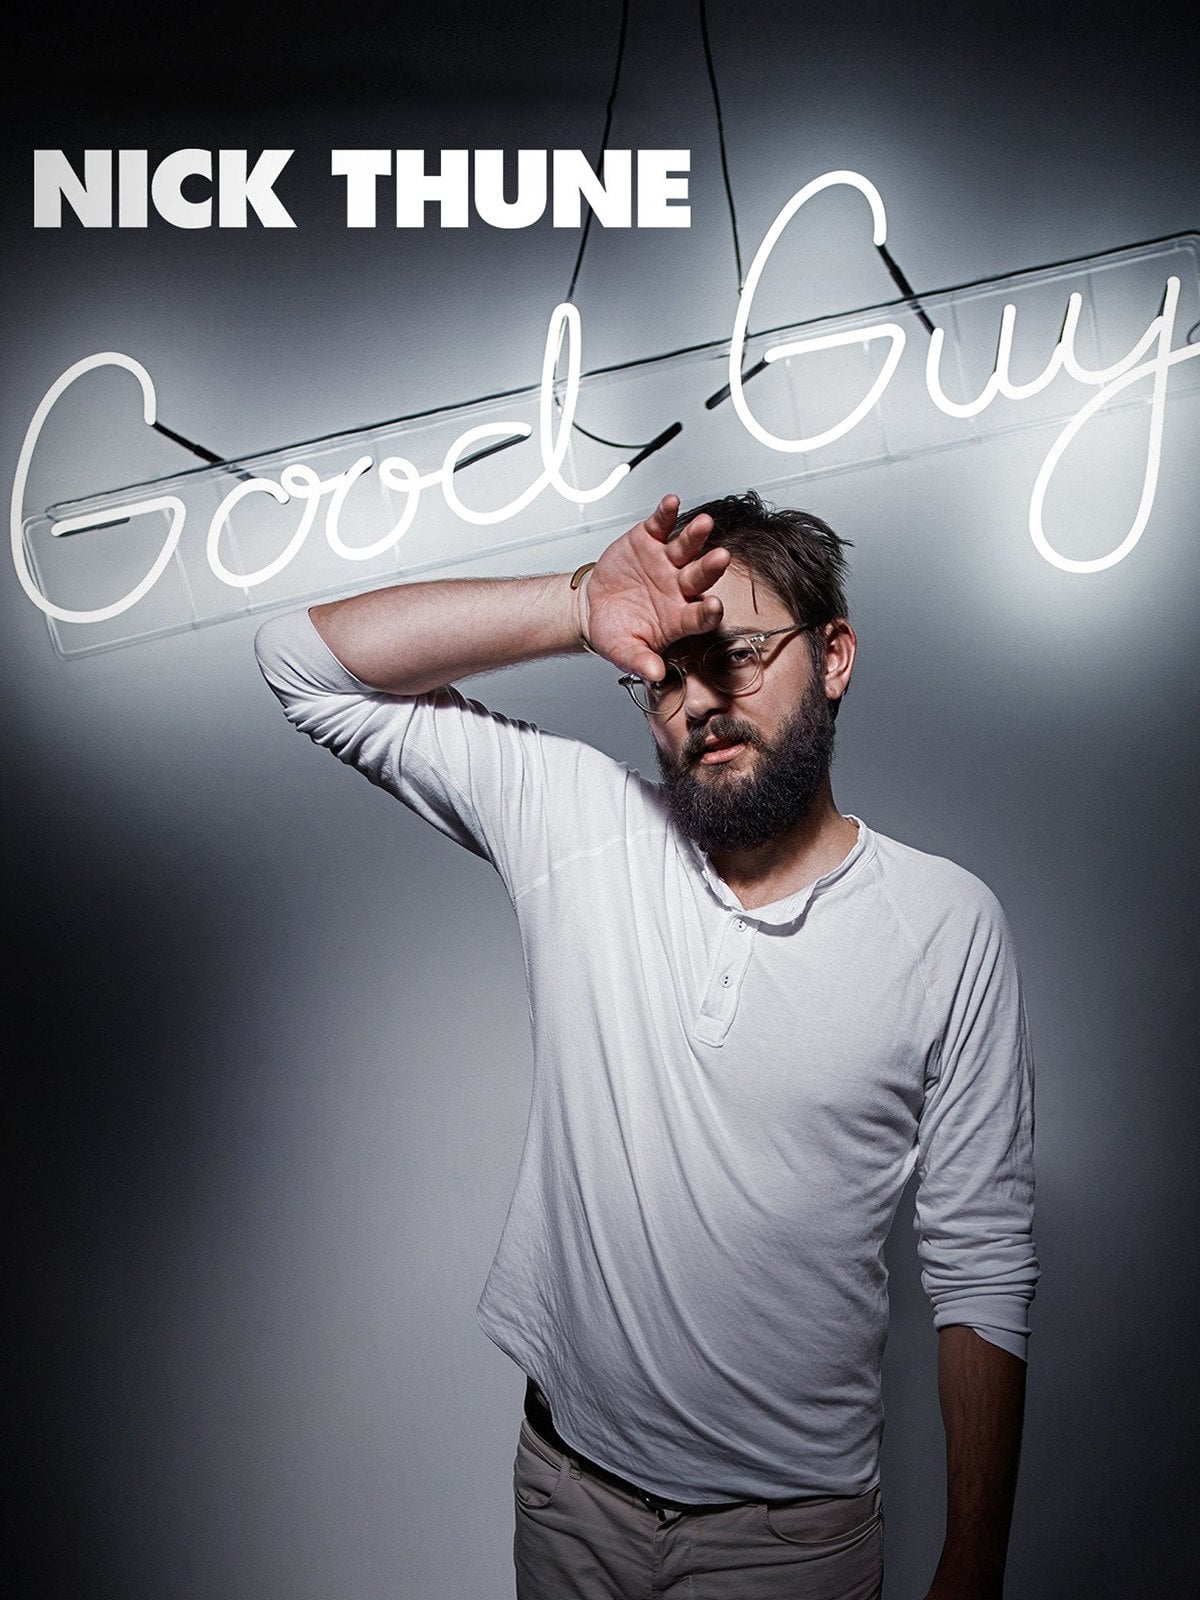 Nick Thune: Good Guy